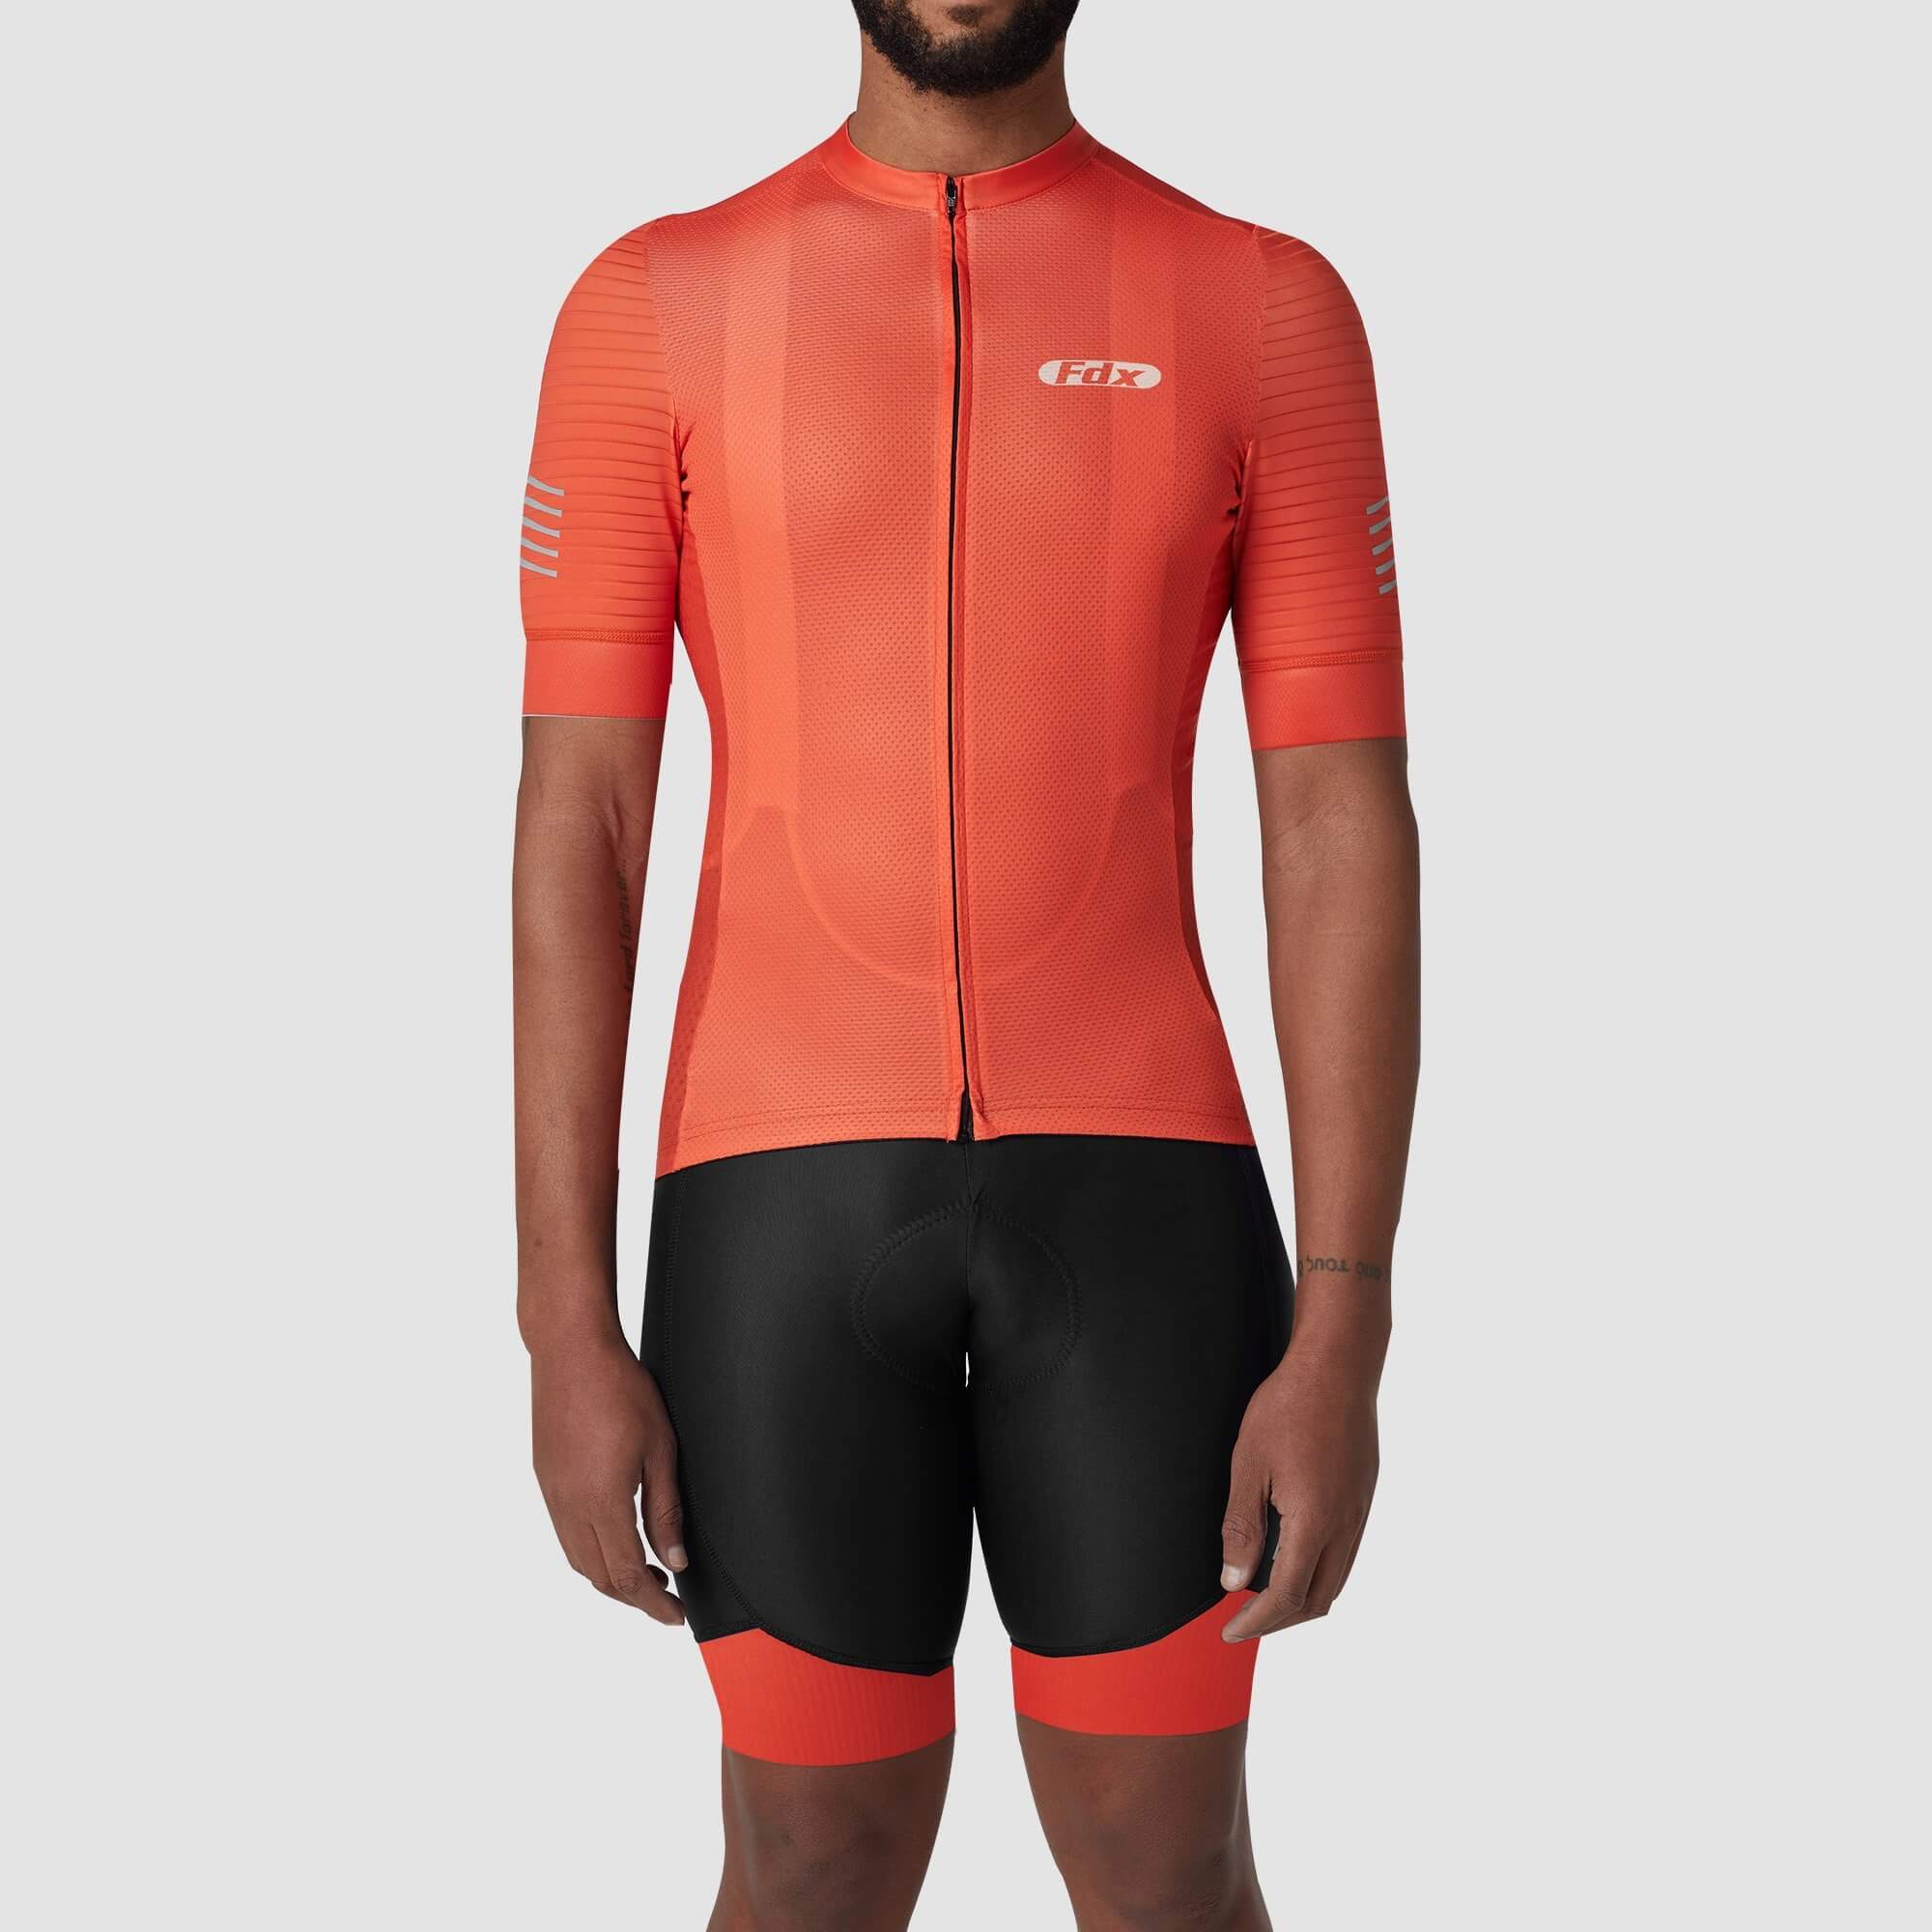 Fdx Mens Orange Short Sleeve Cycling Jersey & Gel Padded Bib Shorts Best Summer Road Bike Wear Light Weight, Hi-viz Reflectors & Pockets - Essential